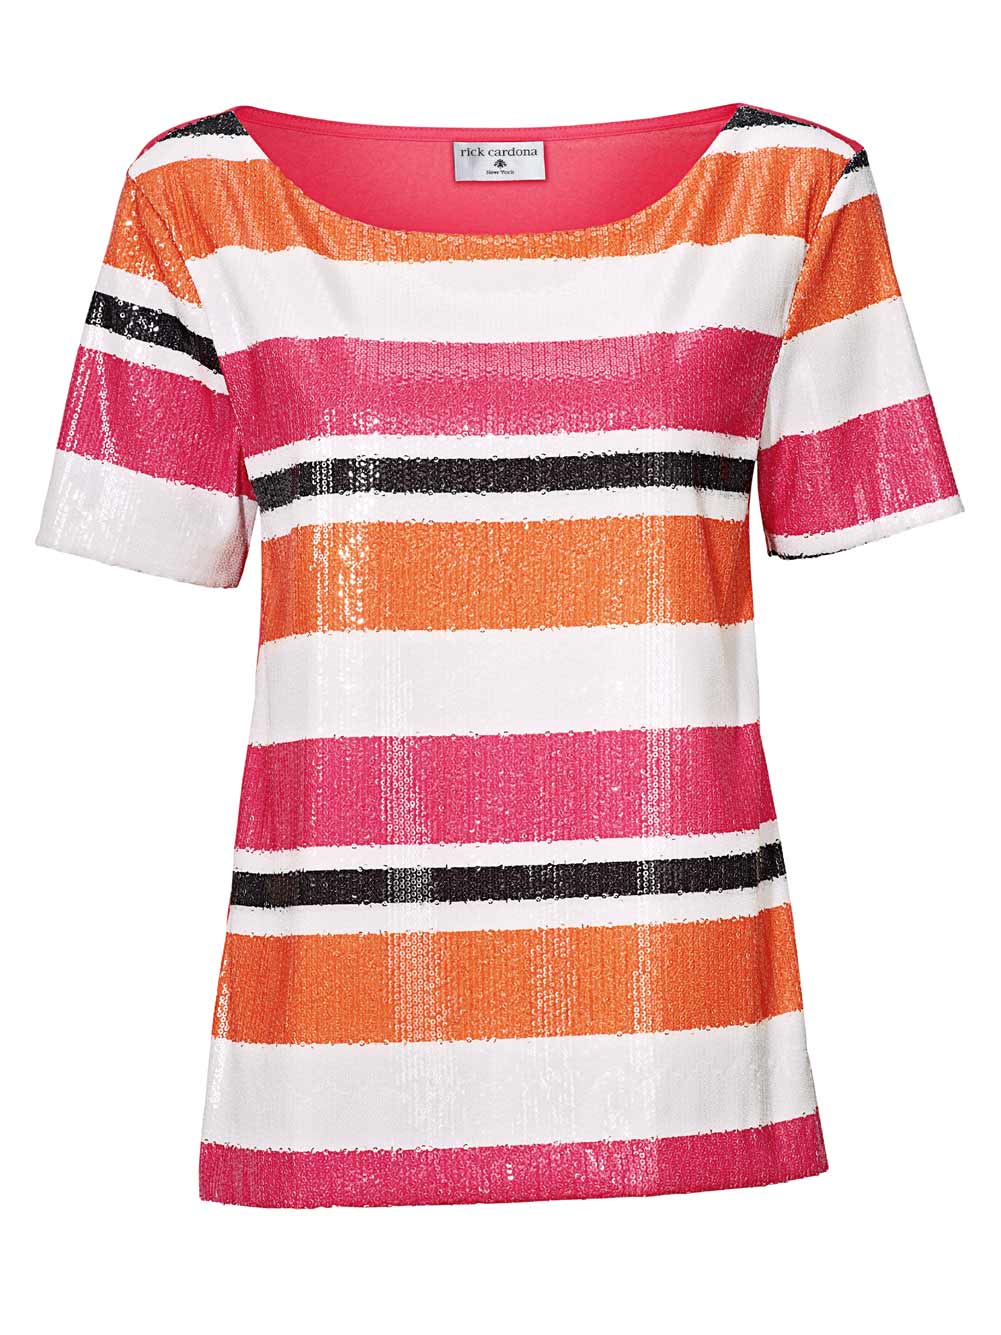 Rick Cardona Damen Designer-Paillettenshirt, orange-pink